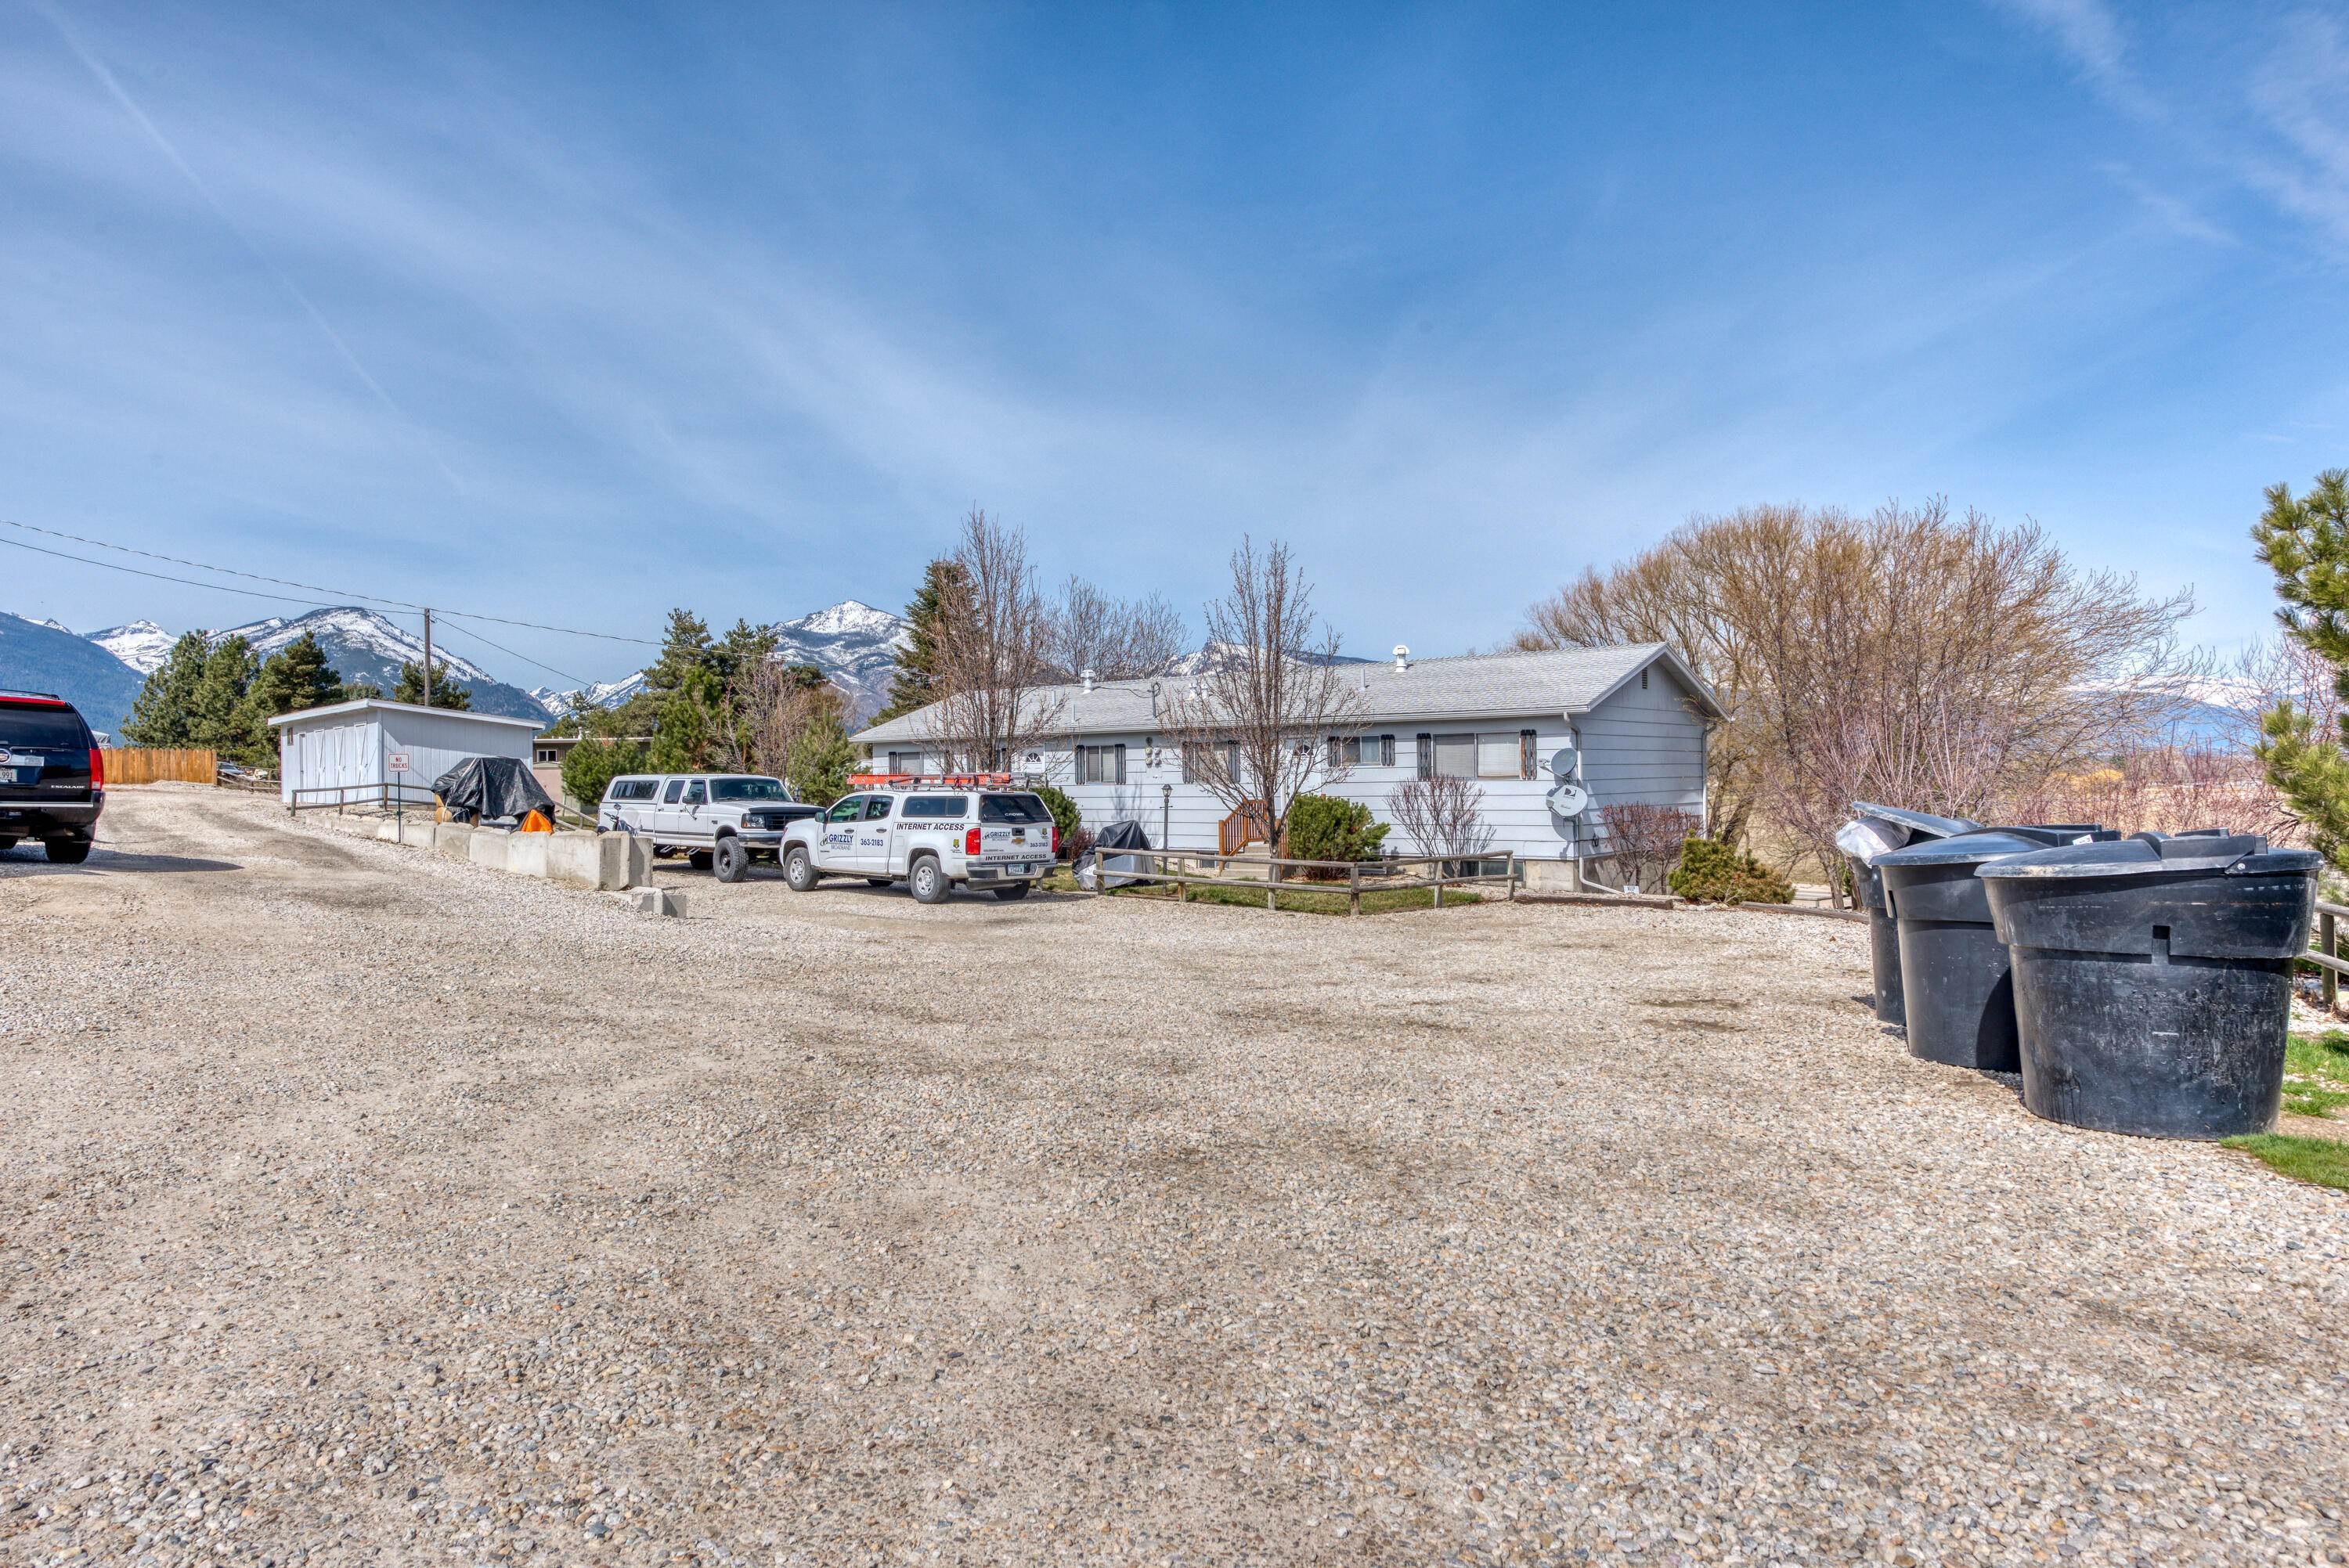 16. Multi-Family Homes for Sale at 215-233 Mockingbird Hill, Hamilton, Montana 59840 United States